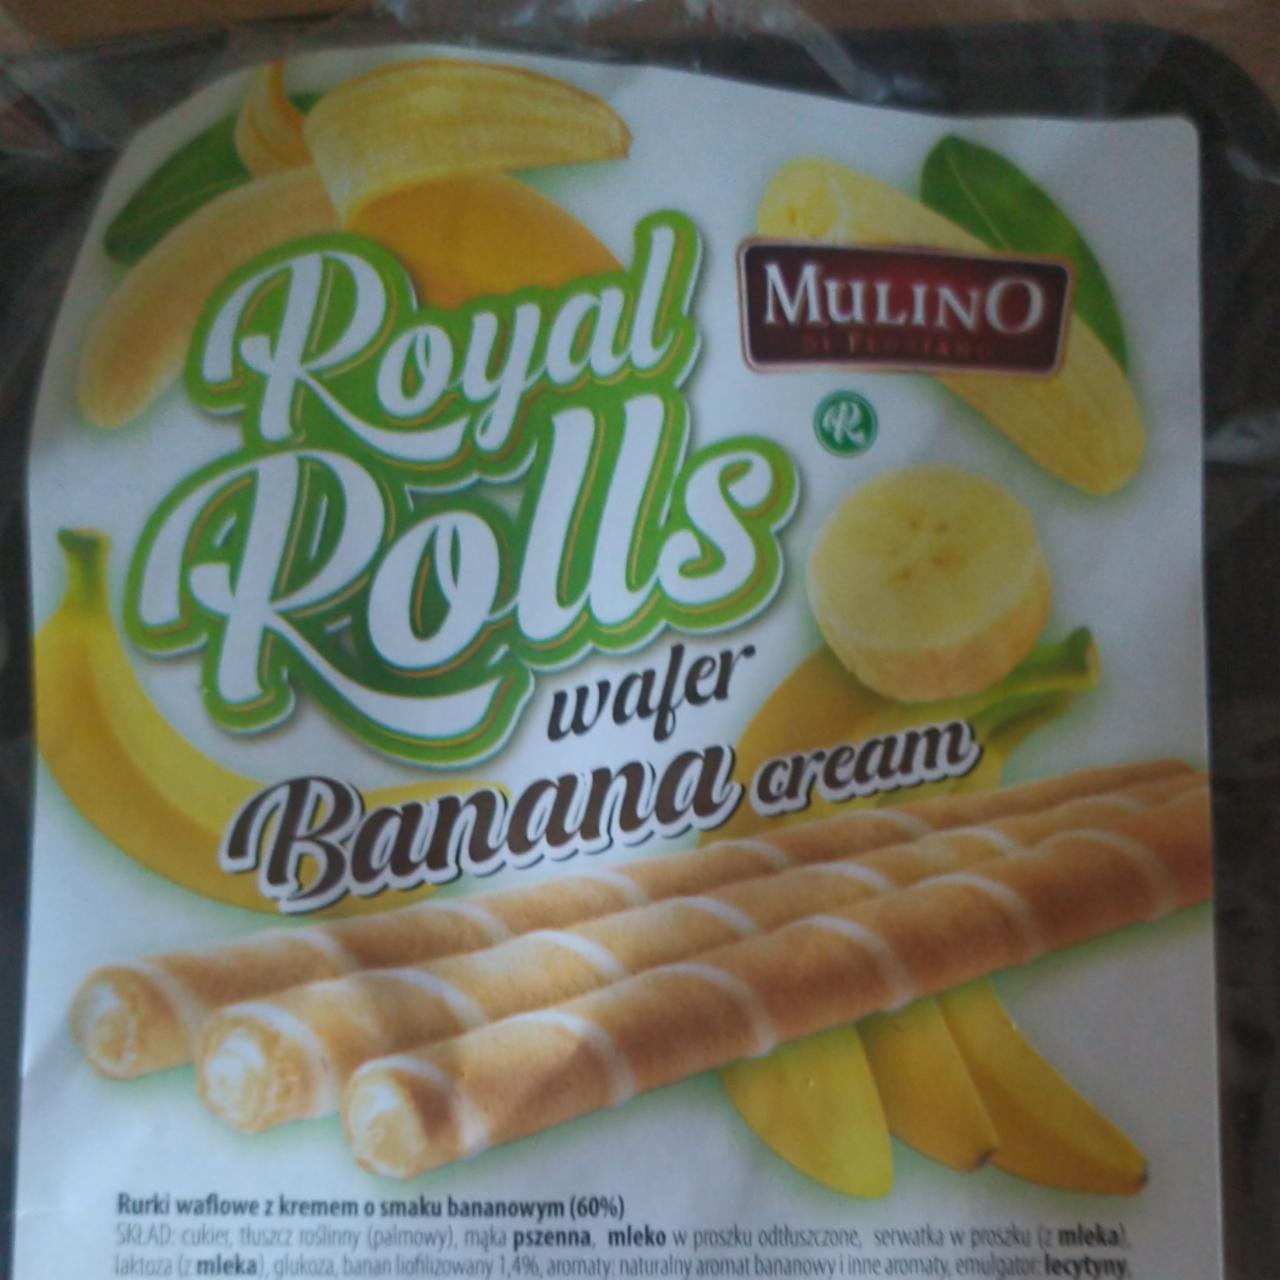 Zdjęcia - Royal Rolls Banna cream mulino